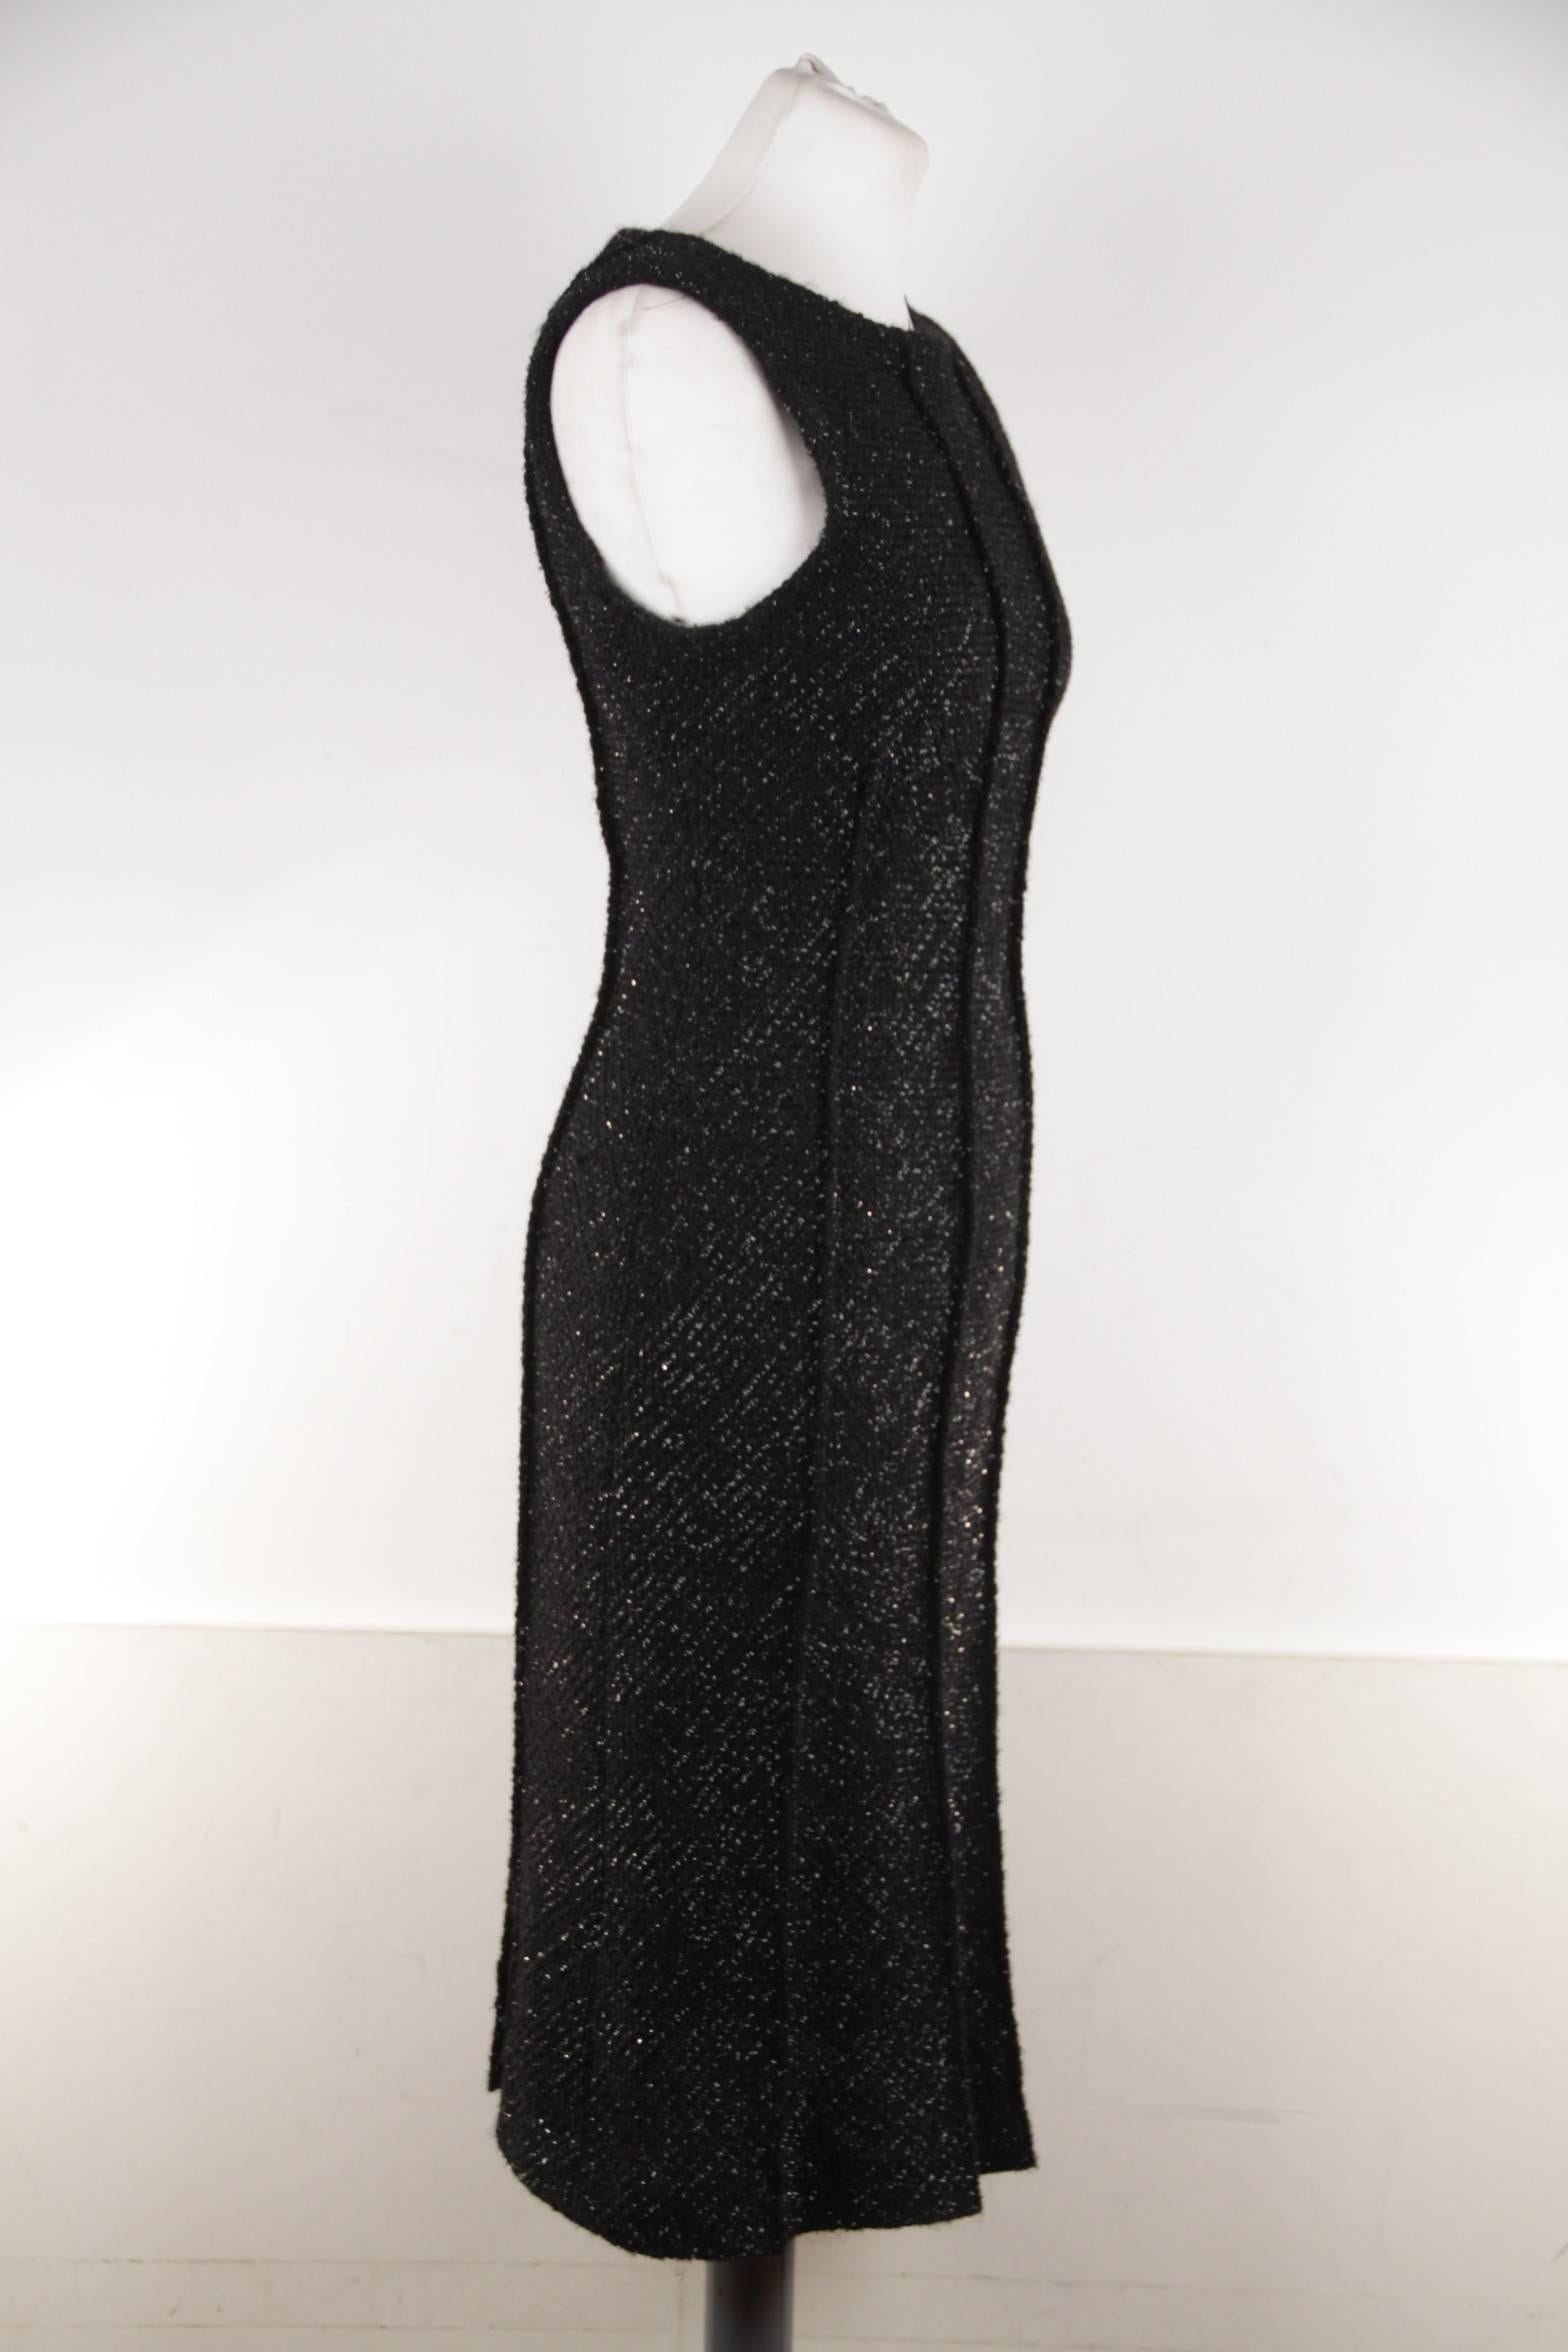 ALBERTA FERRETTI Italian Boucle Tweed LITTLE BLACK DRESS Sleeveless Sz 44 IT 1